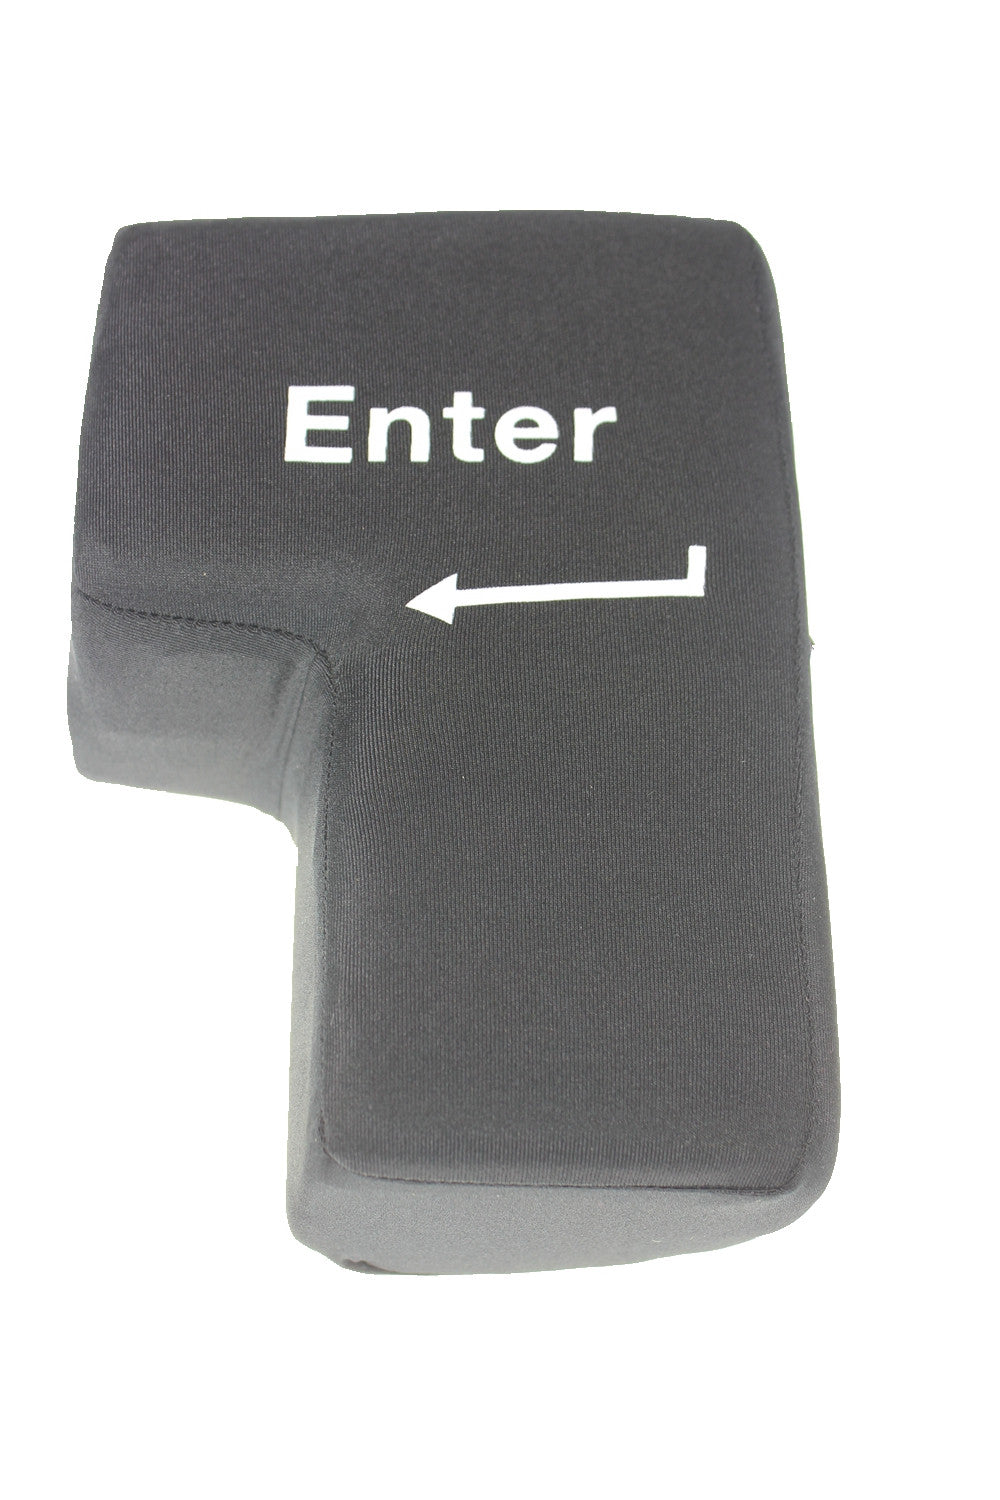 Big Enter Key - USB Powered Stress Relief Device